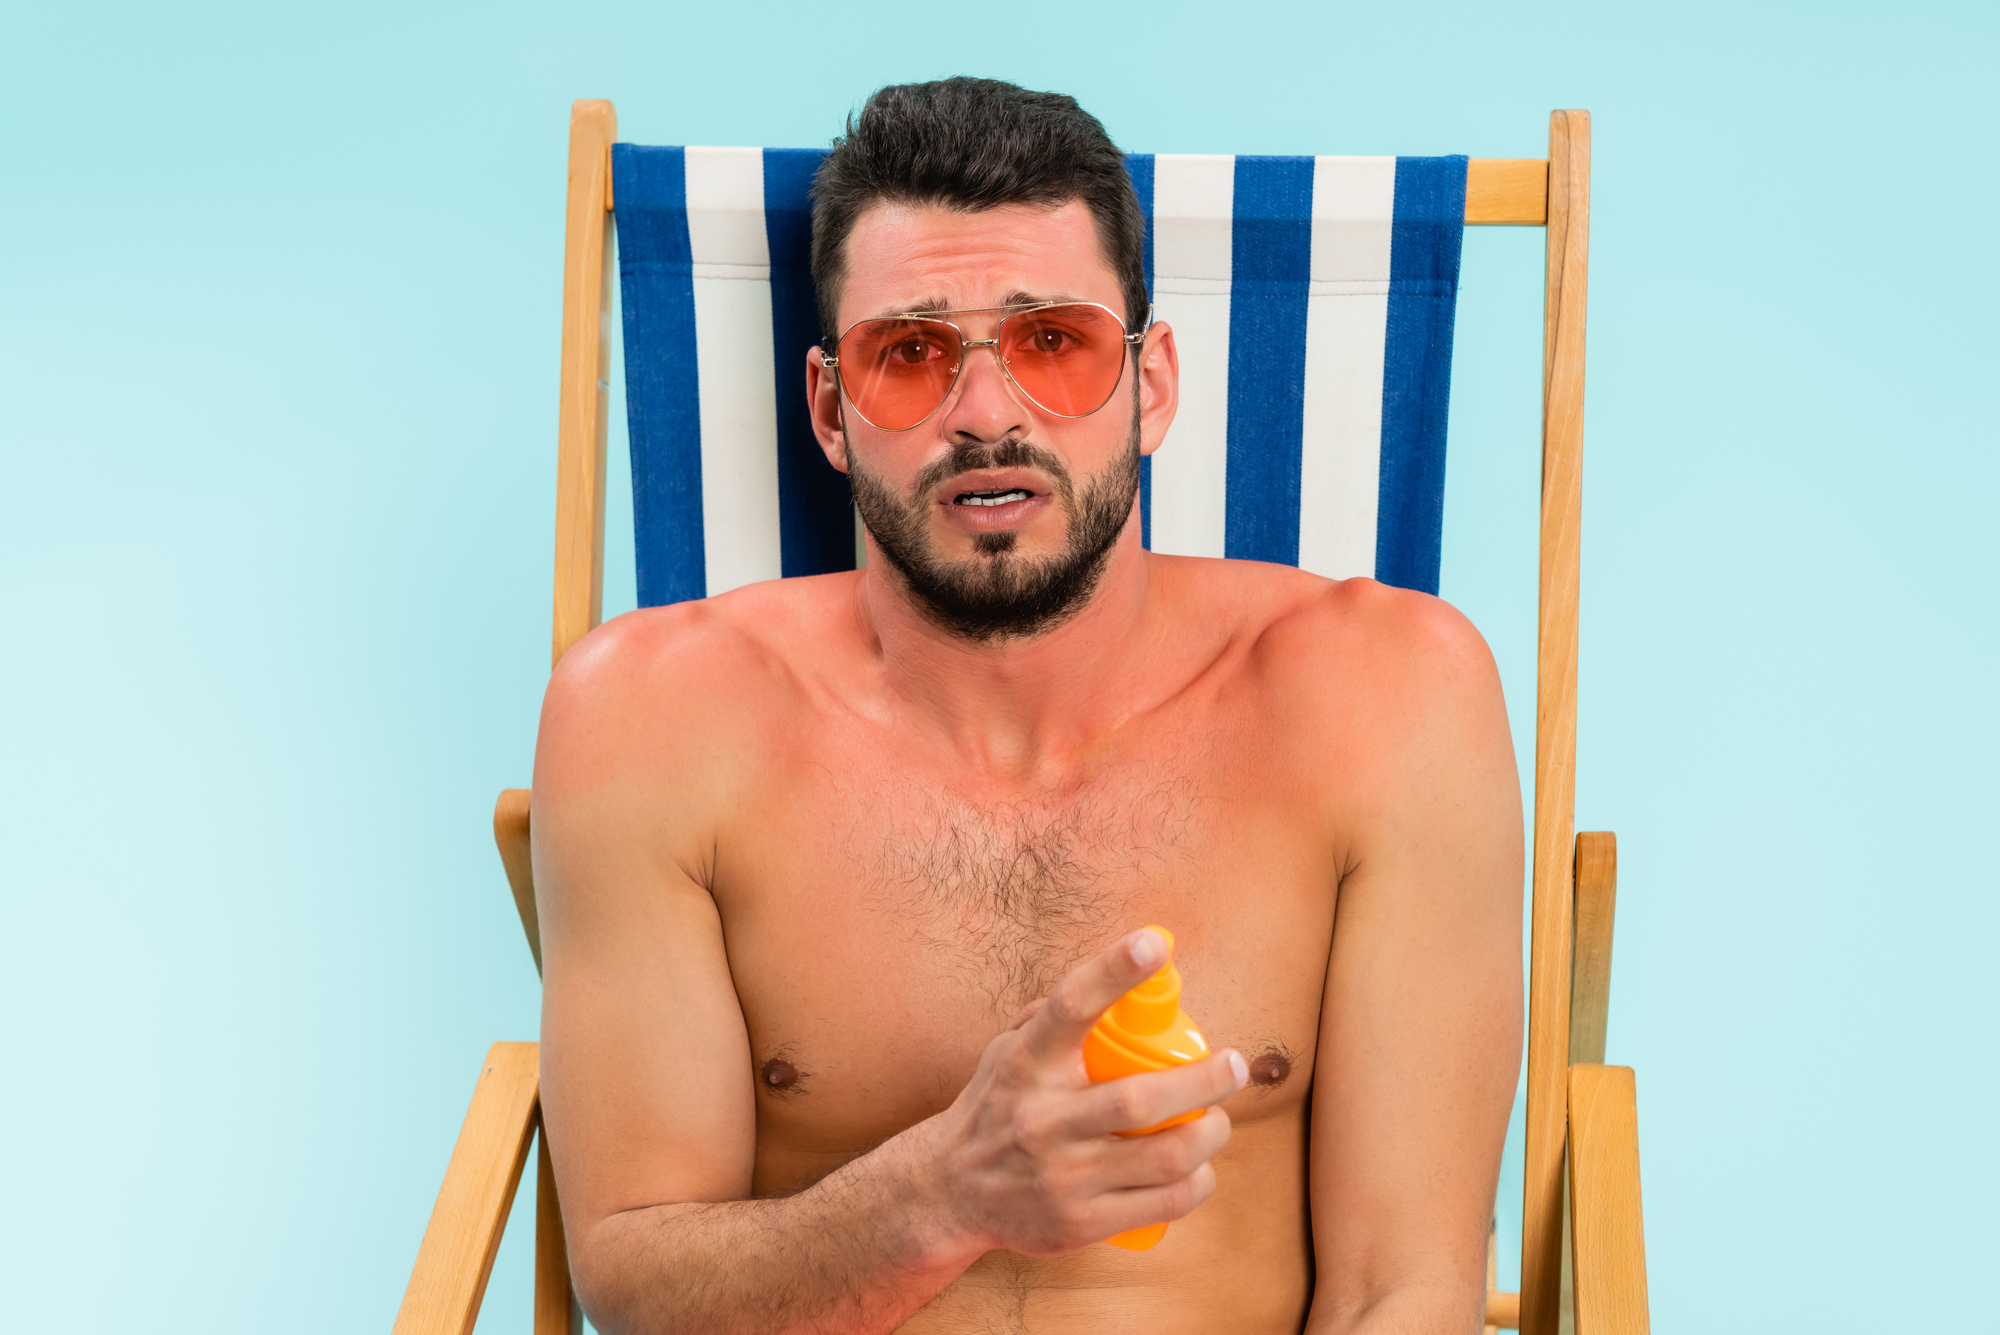 Sunburn. A man applying suntan lotion to prevent burning in the sun.